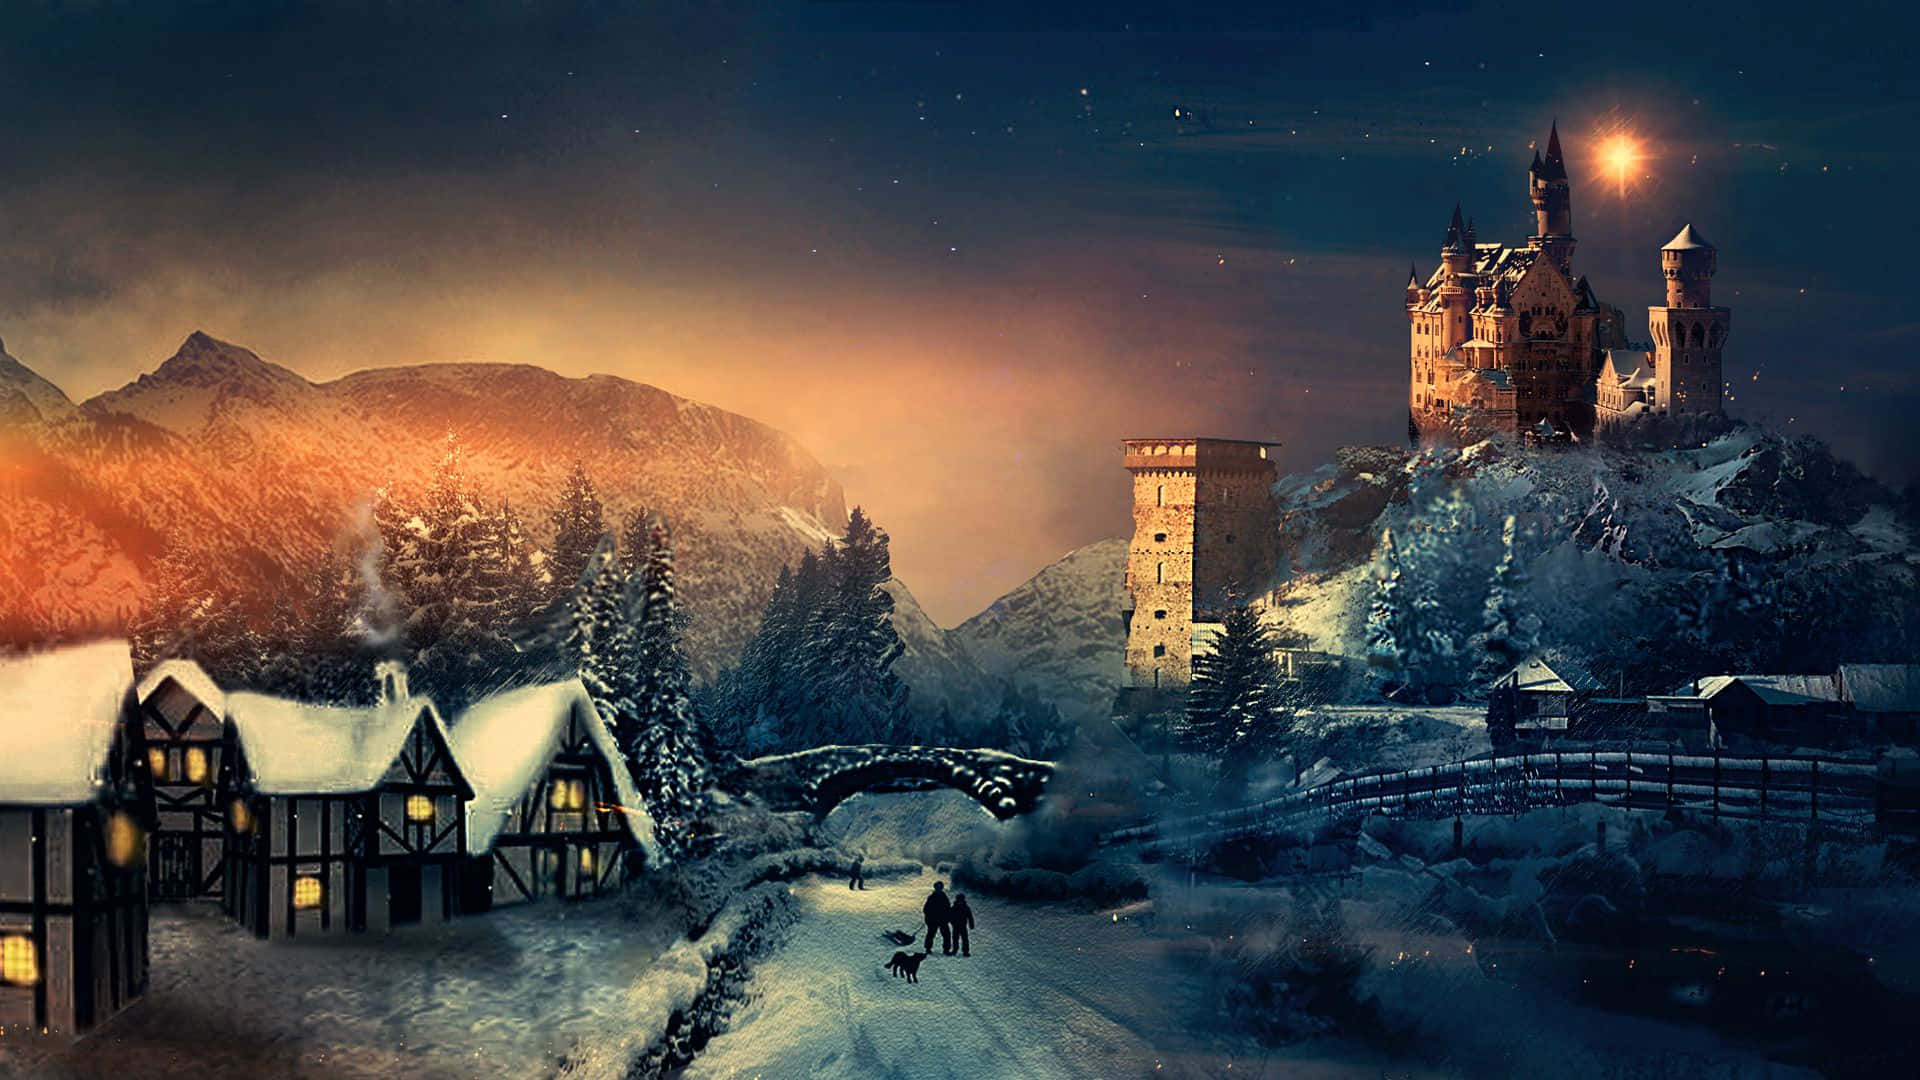 Image  Celebrate the Season in a Christmas Village! Wallpaper